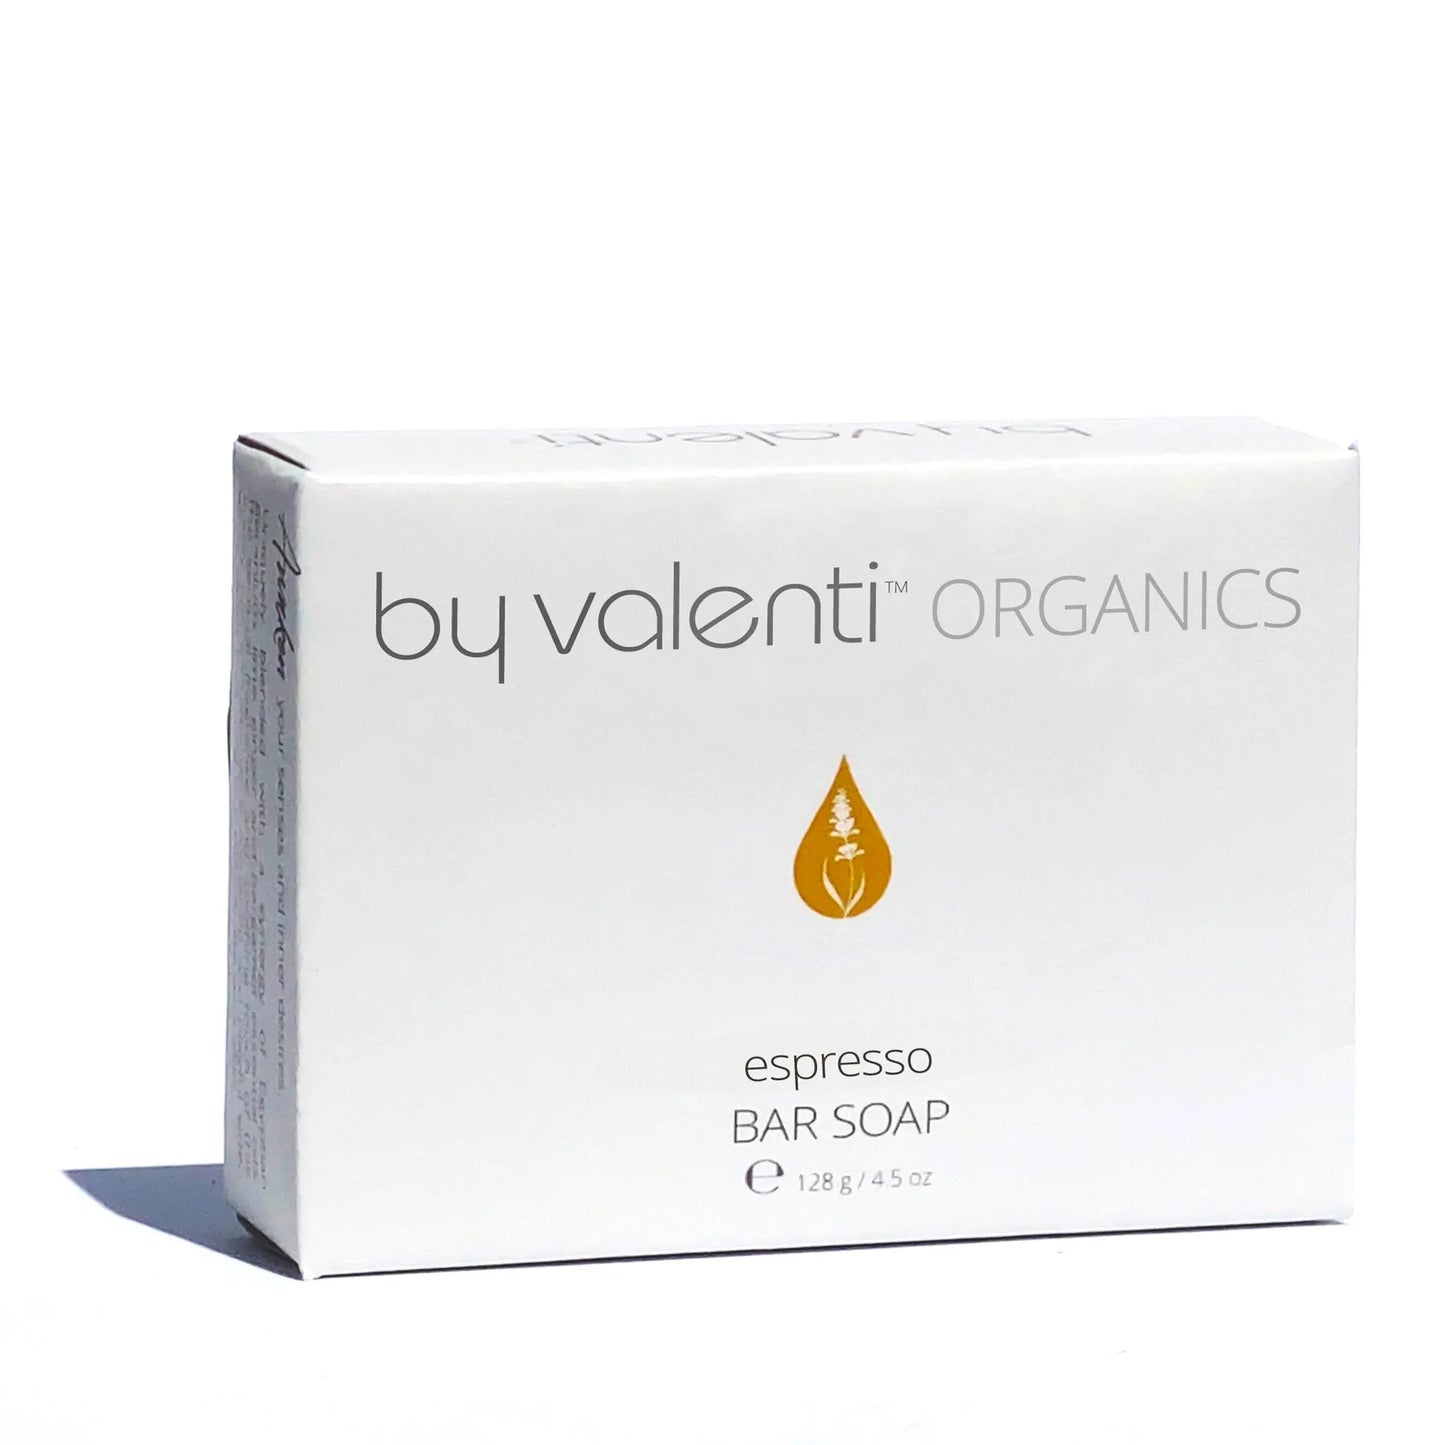 By Valenti Organics Espresso Exfoliating Bar Soap Natural Organic Soaps